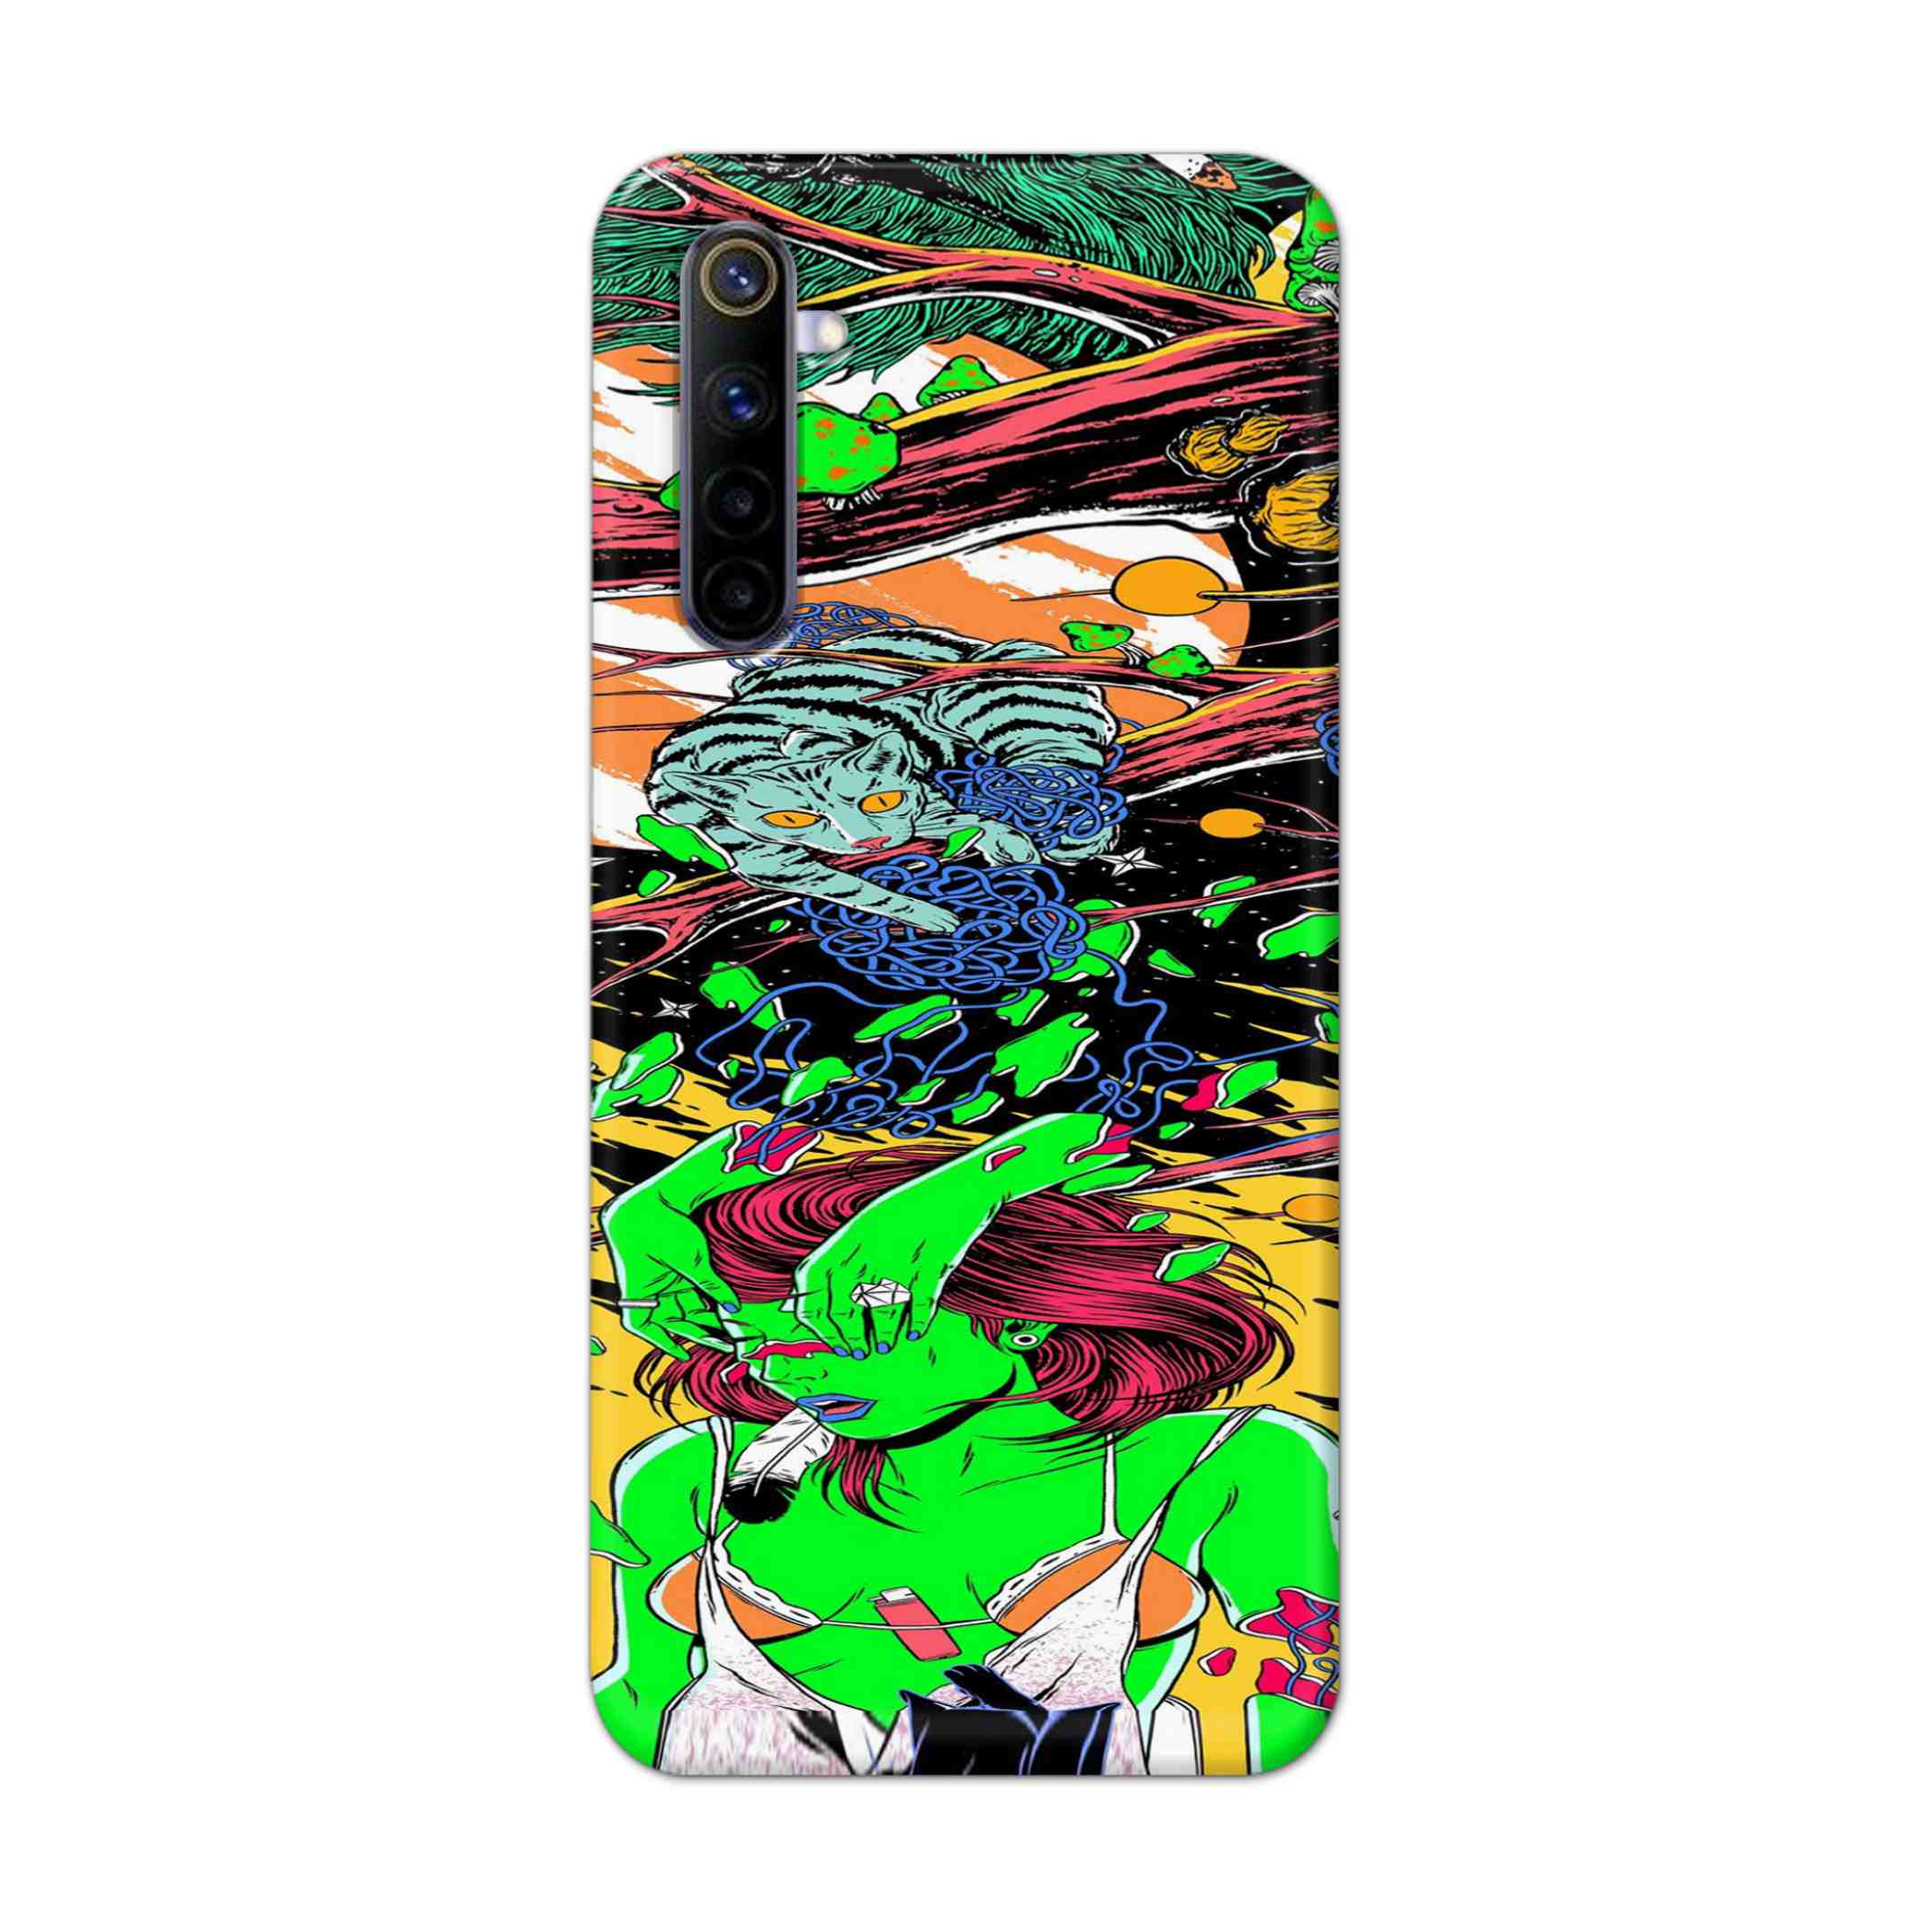 Buy Green Girl Art Hard Back Mobile Phone Case Cover For REALME 6 Online